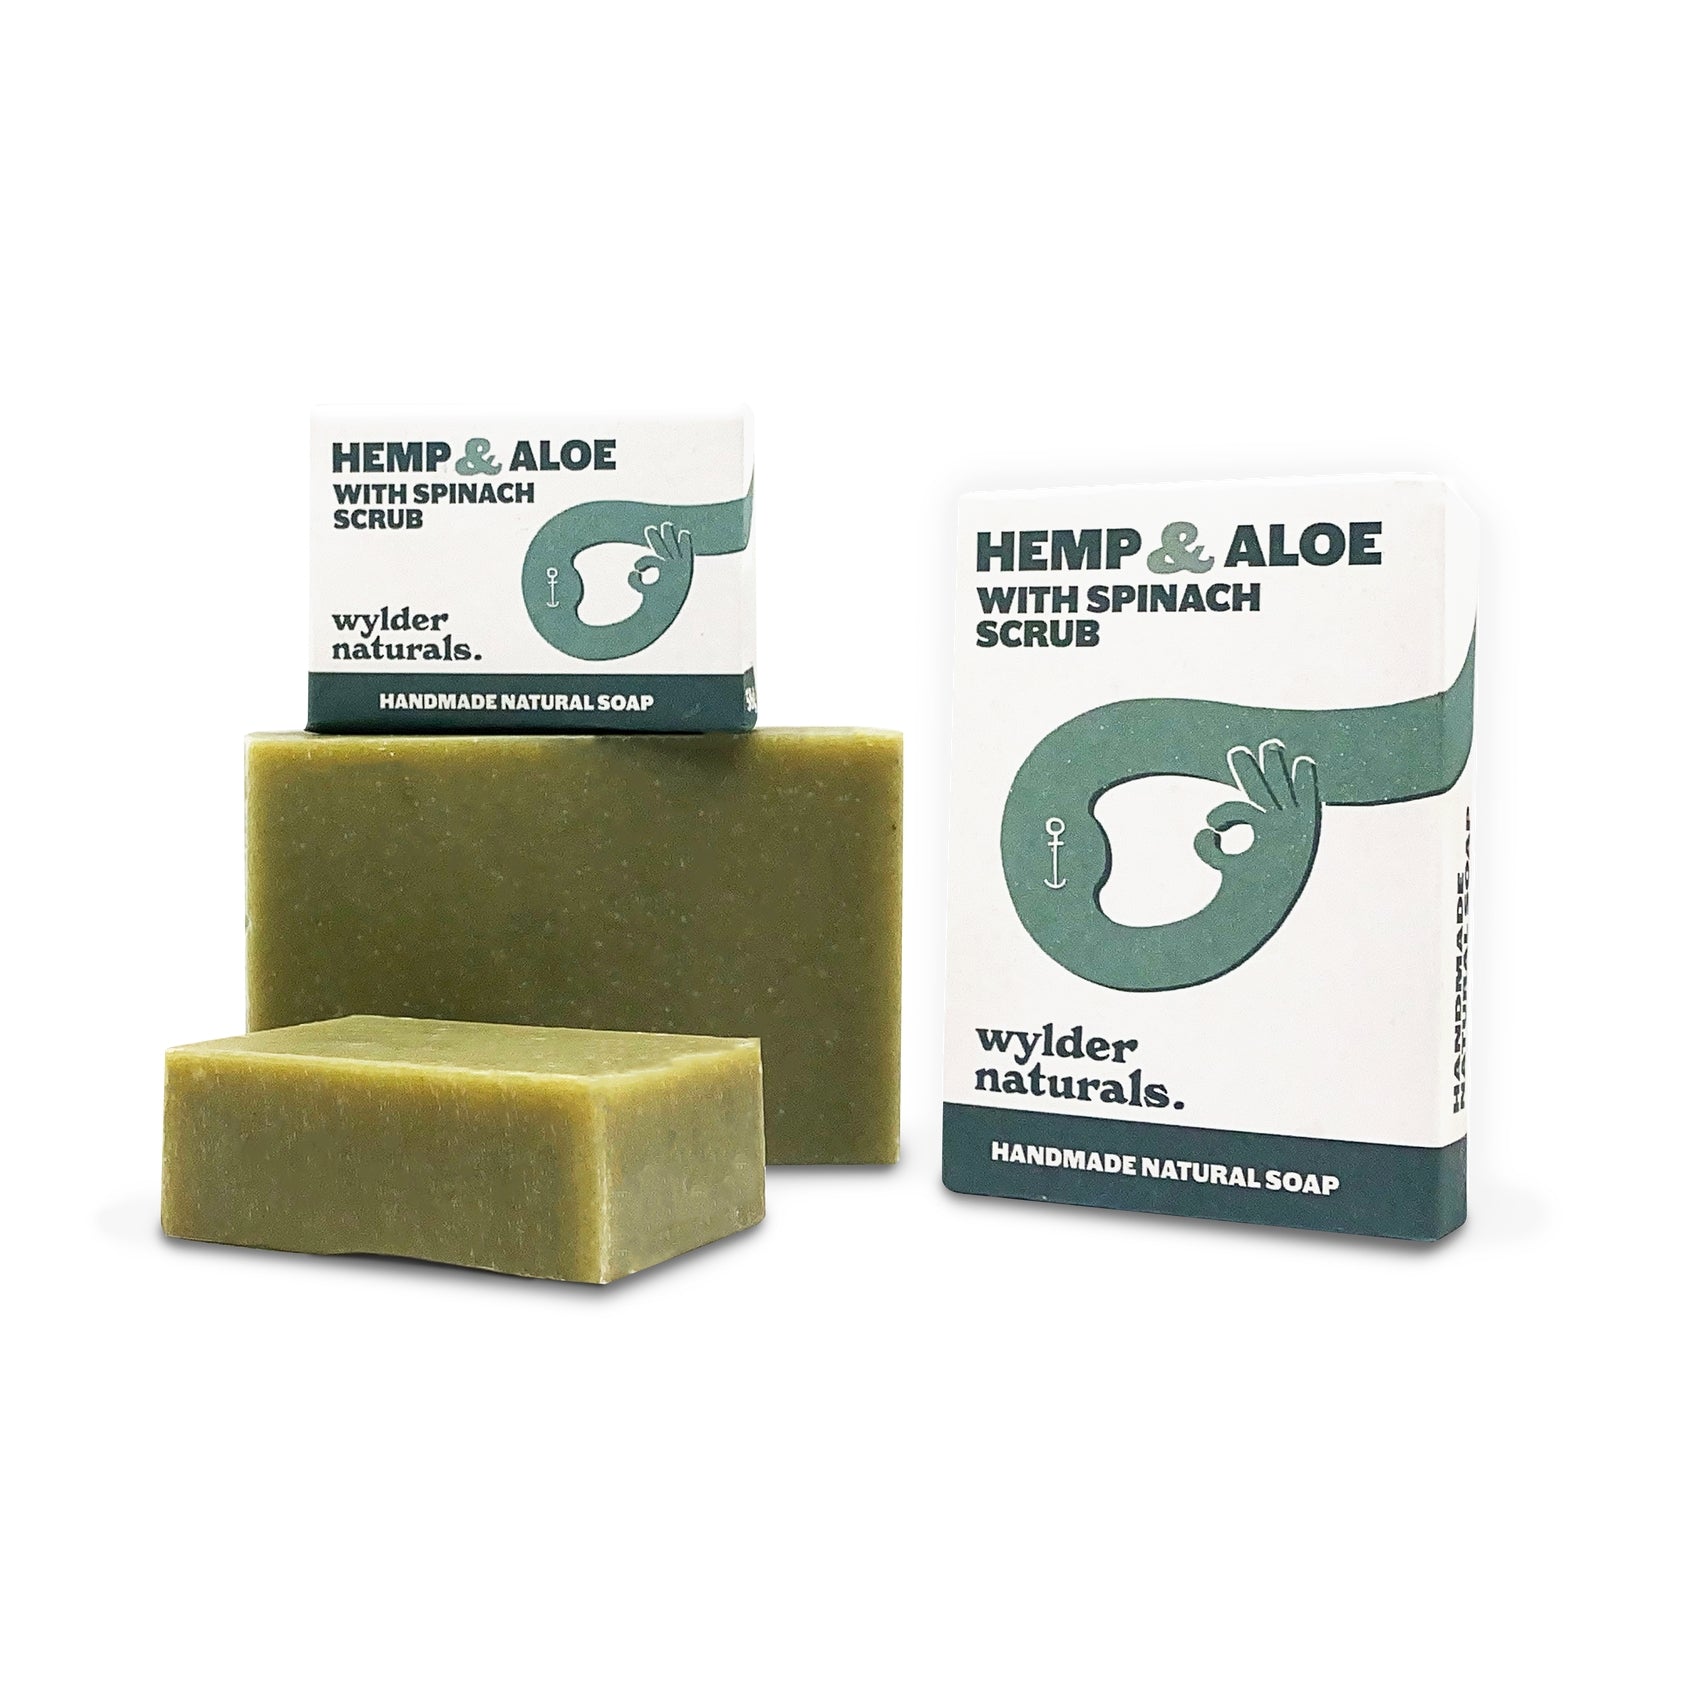 Hemp & Aloe With Spinach Scrub Soap